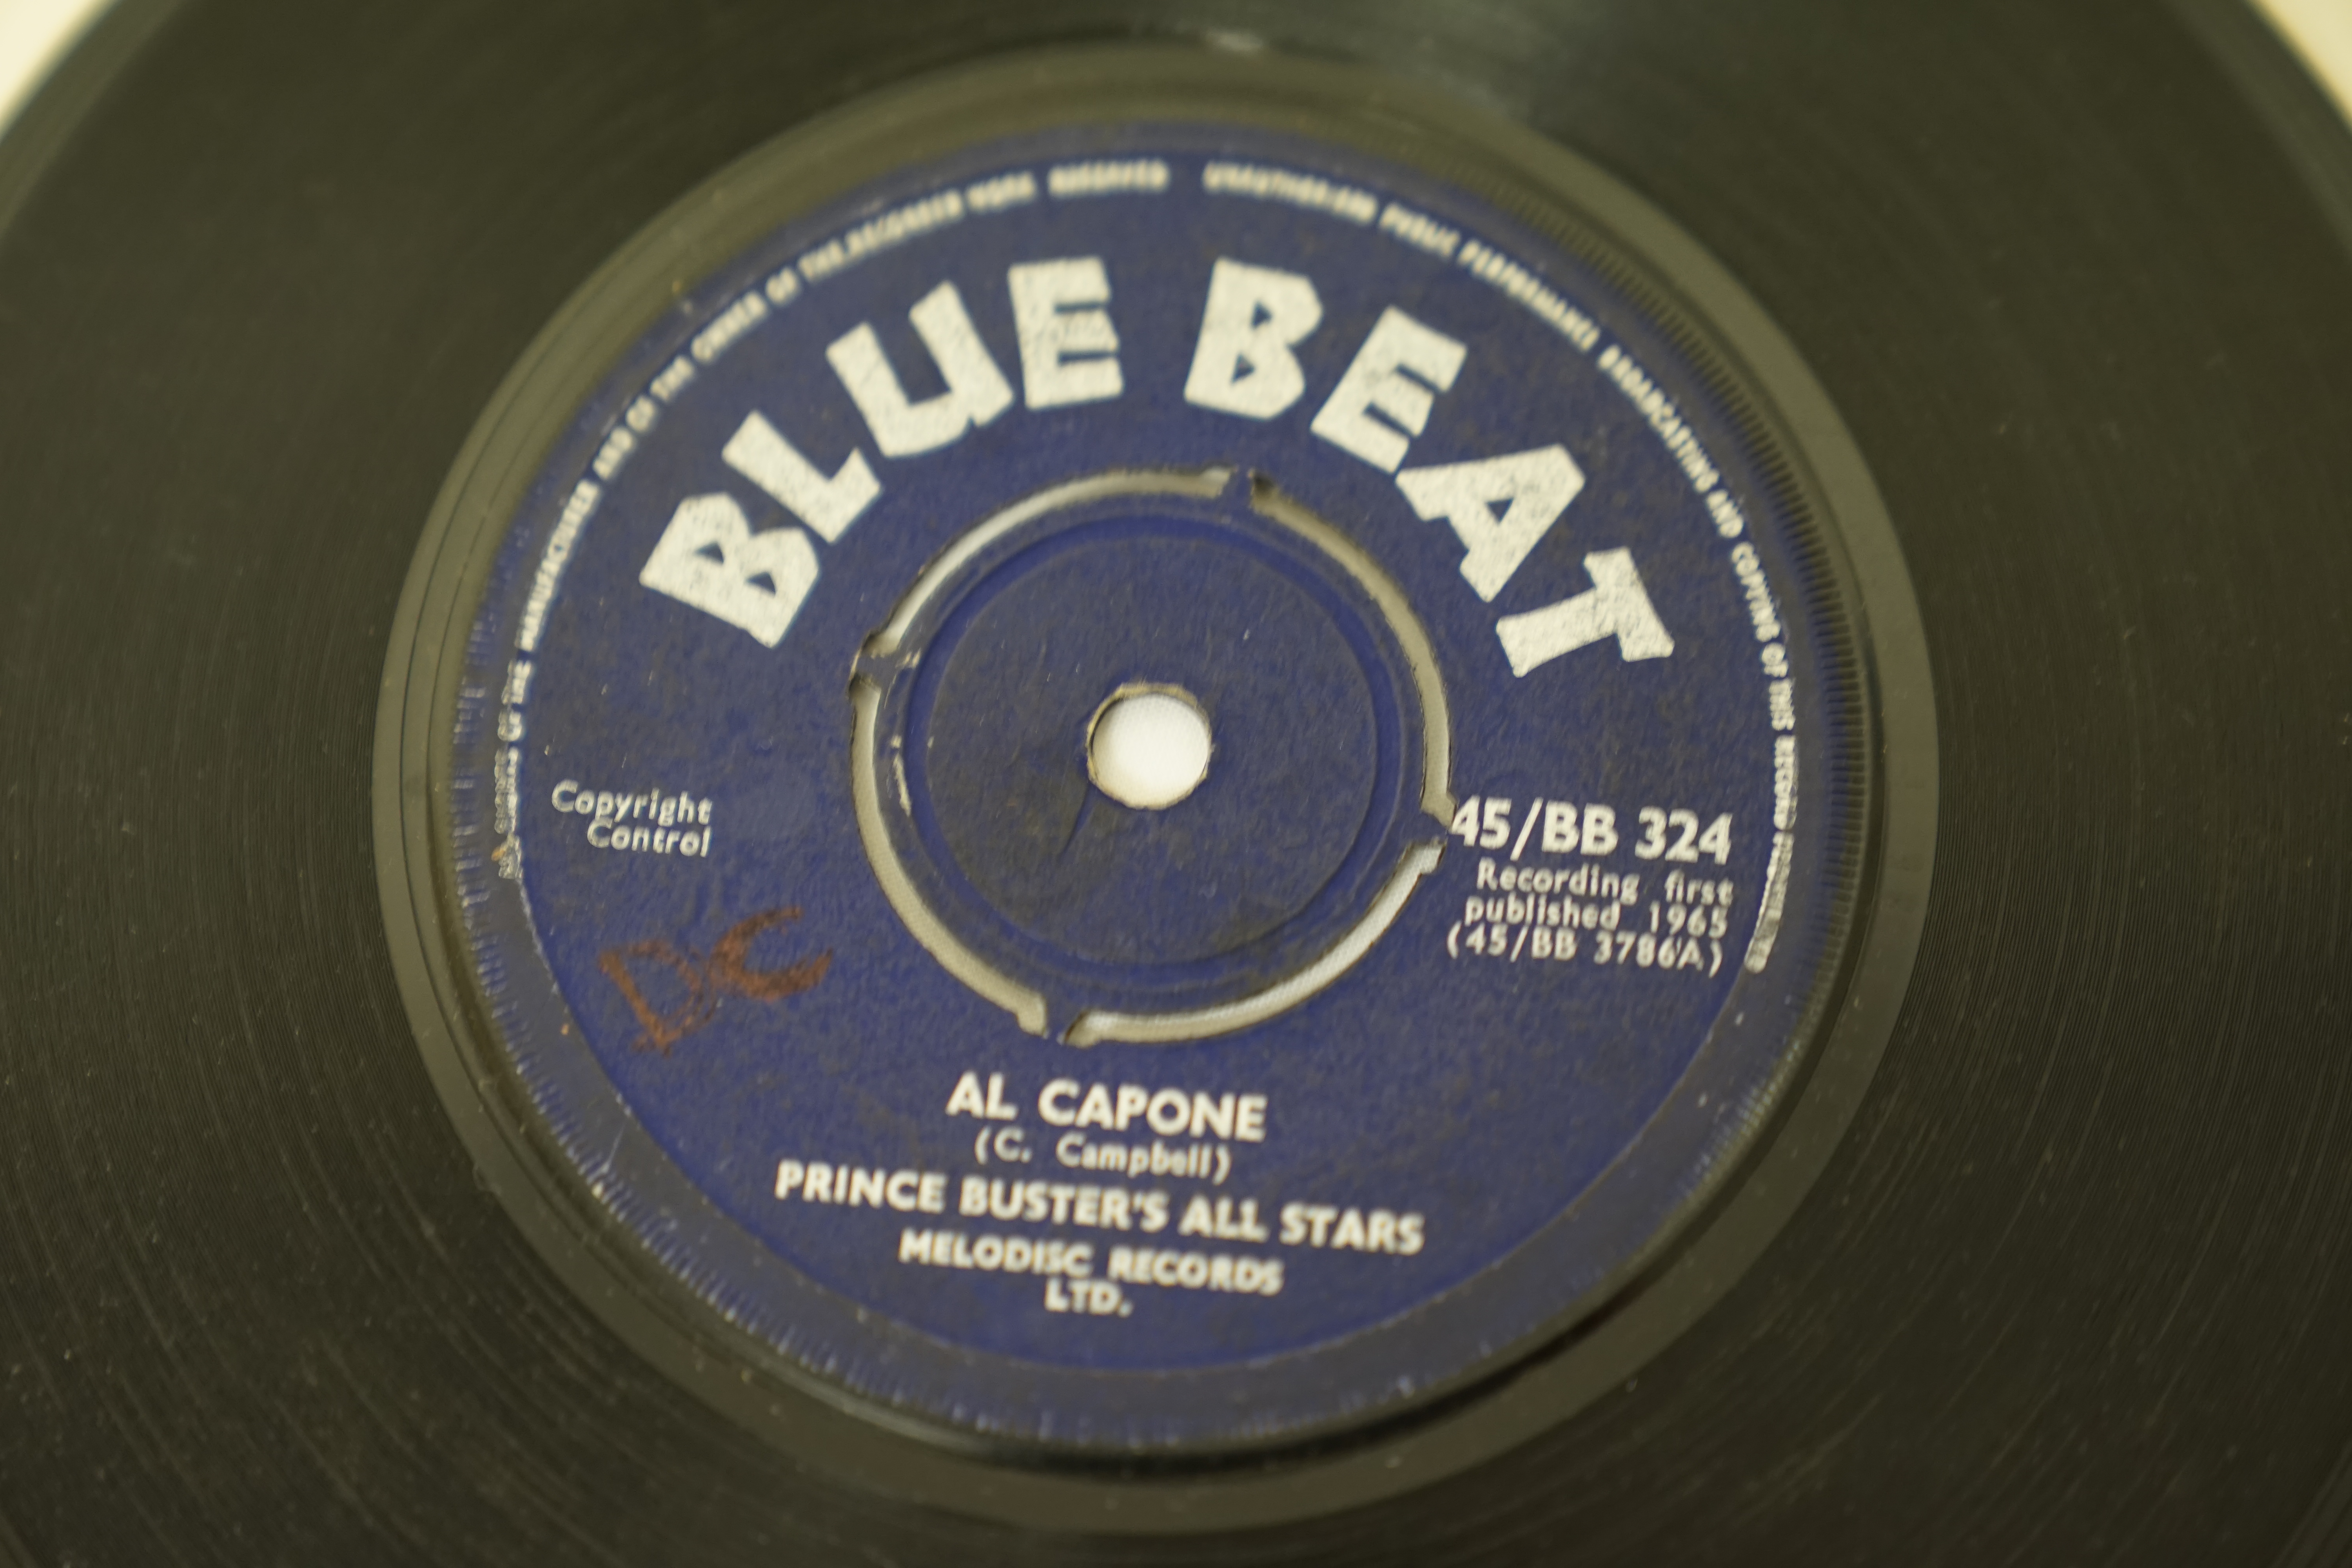 Vinyl - 6 UK Blue Beat Records / Prince Buster 7" singles, Reggae / Ska / Skinhead Reggae, - Image 24 of 25